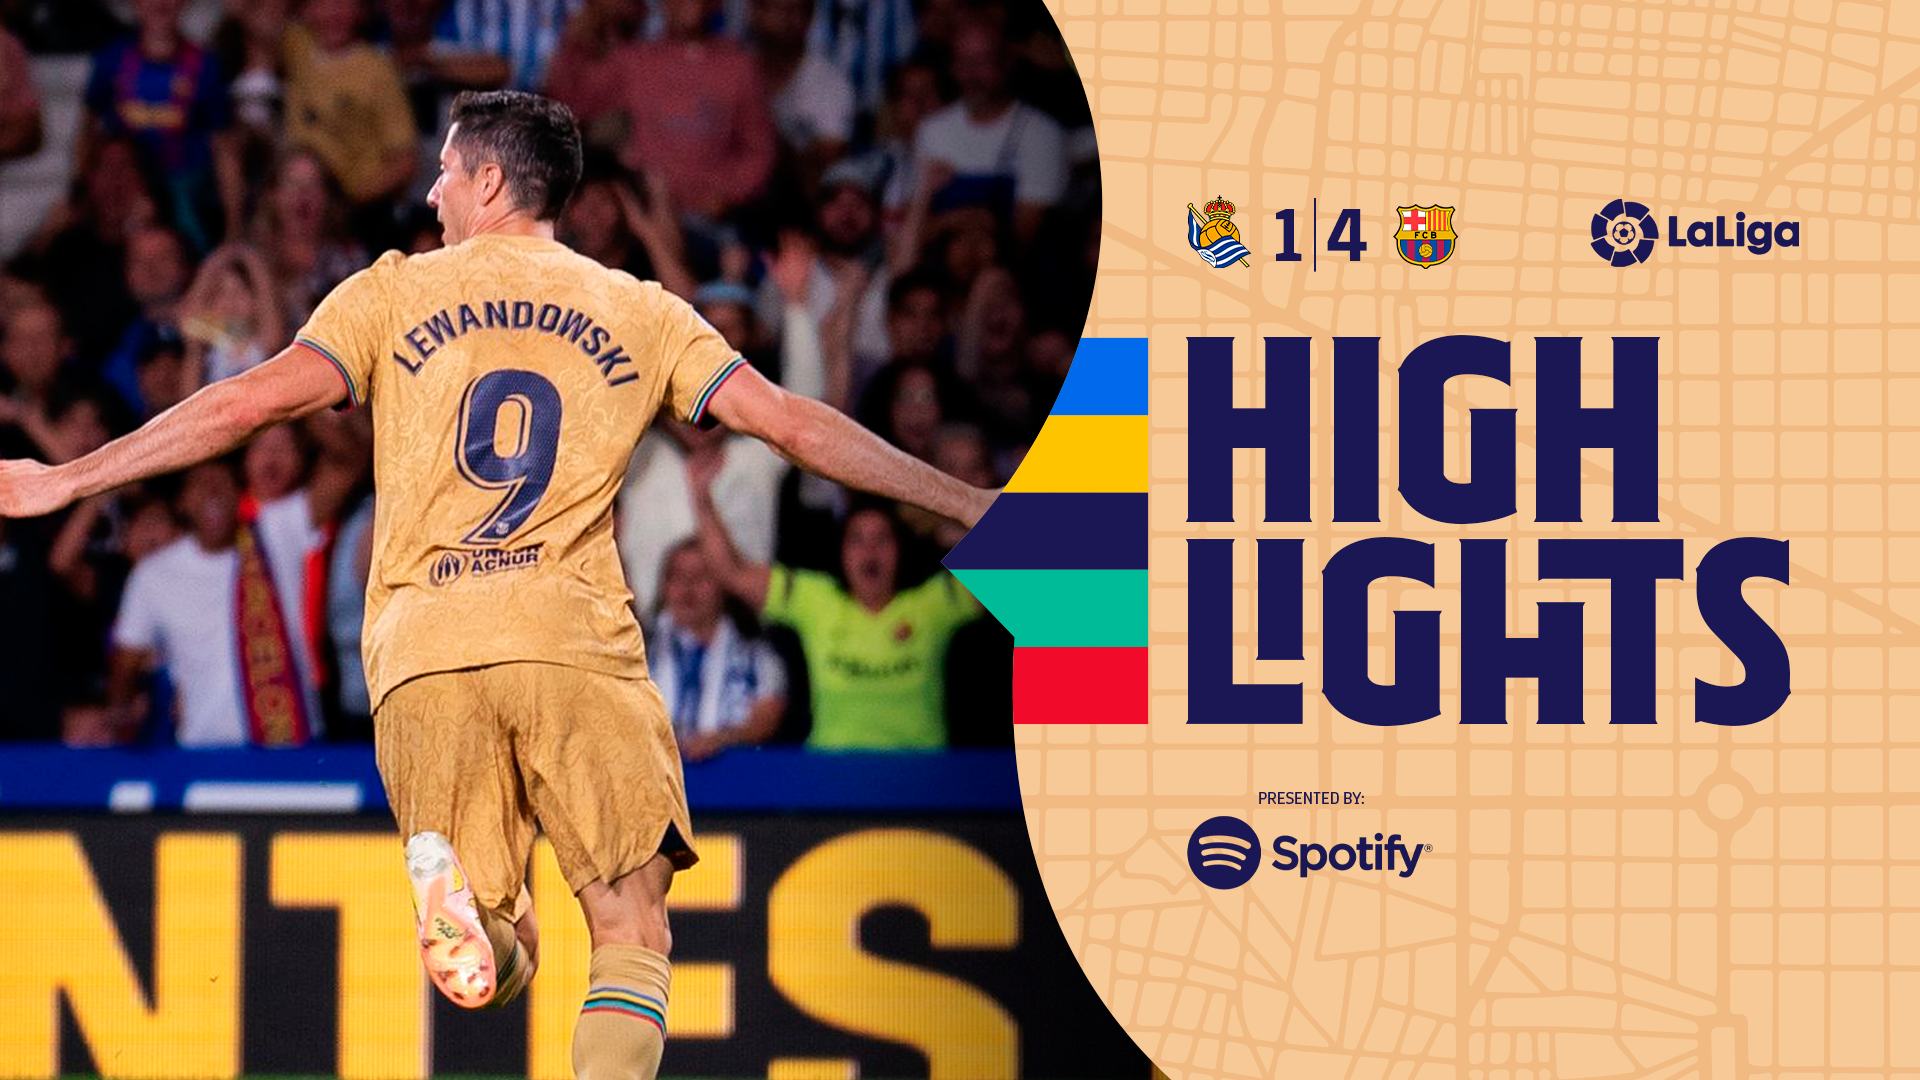 HIGHLIGHTS Real Sociedad | LaLiga 22/23